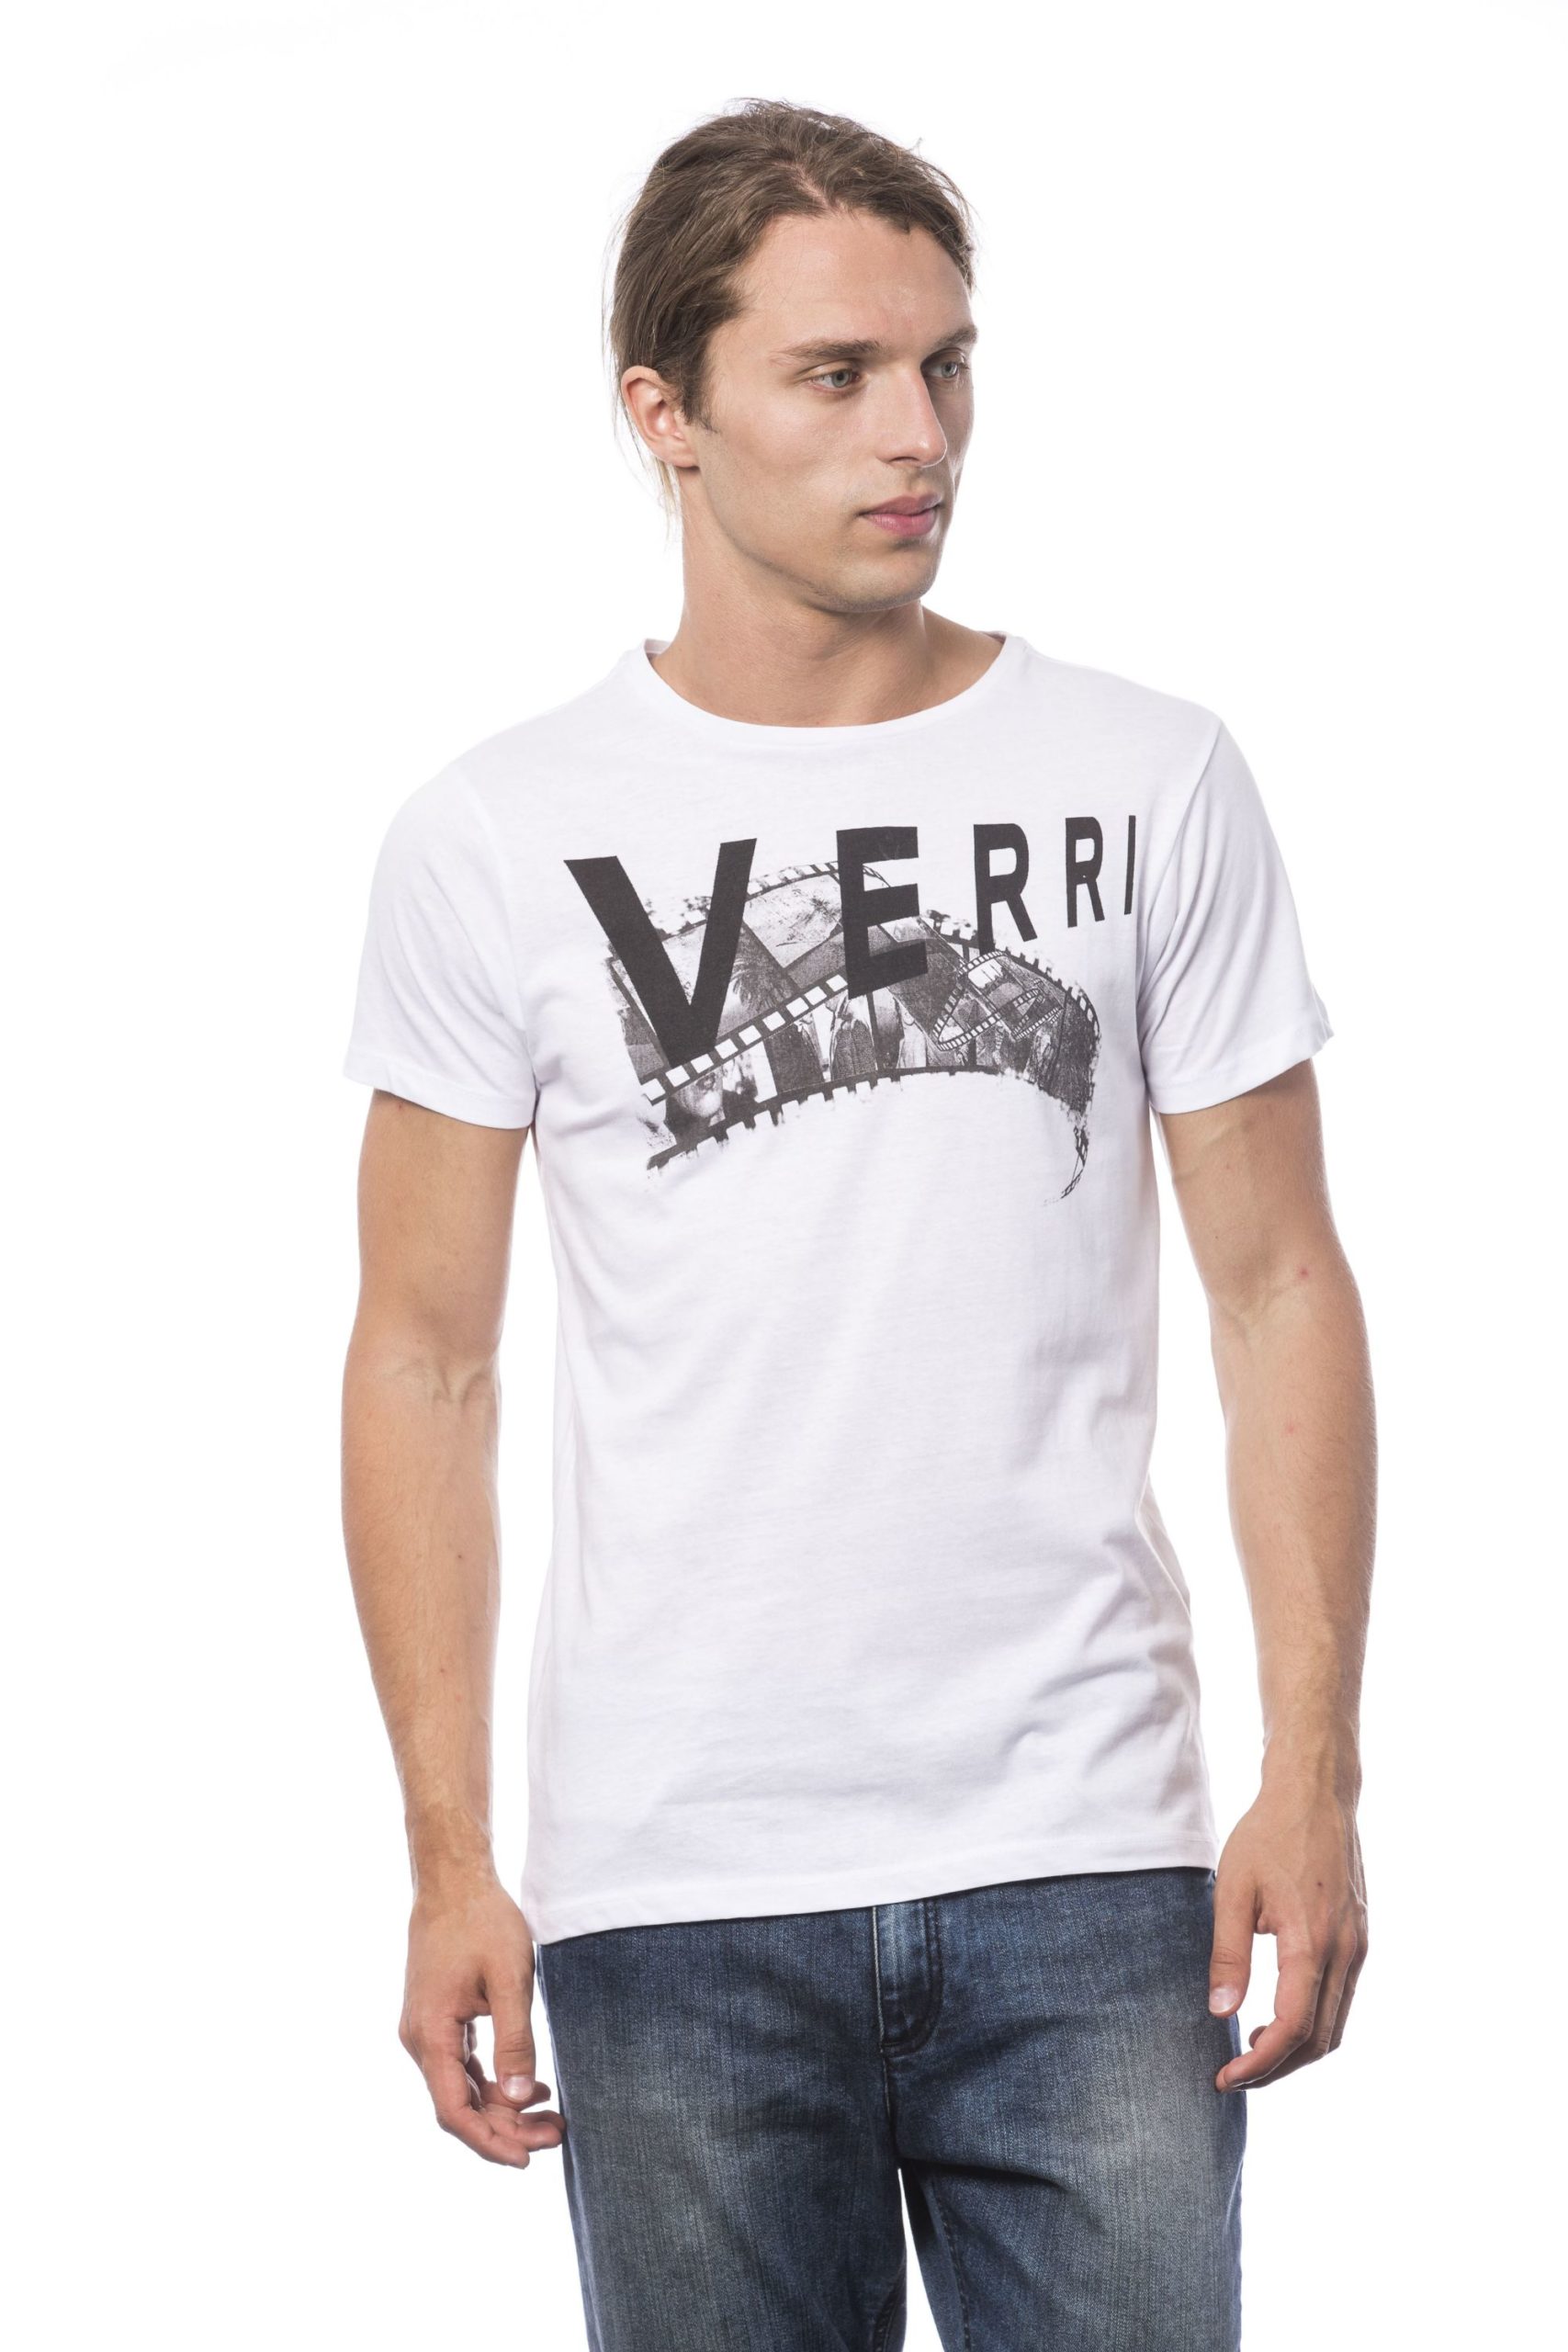 Verri Men's Bianco T-Shirt White VE681327 - S